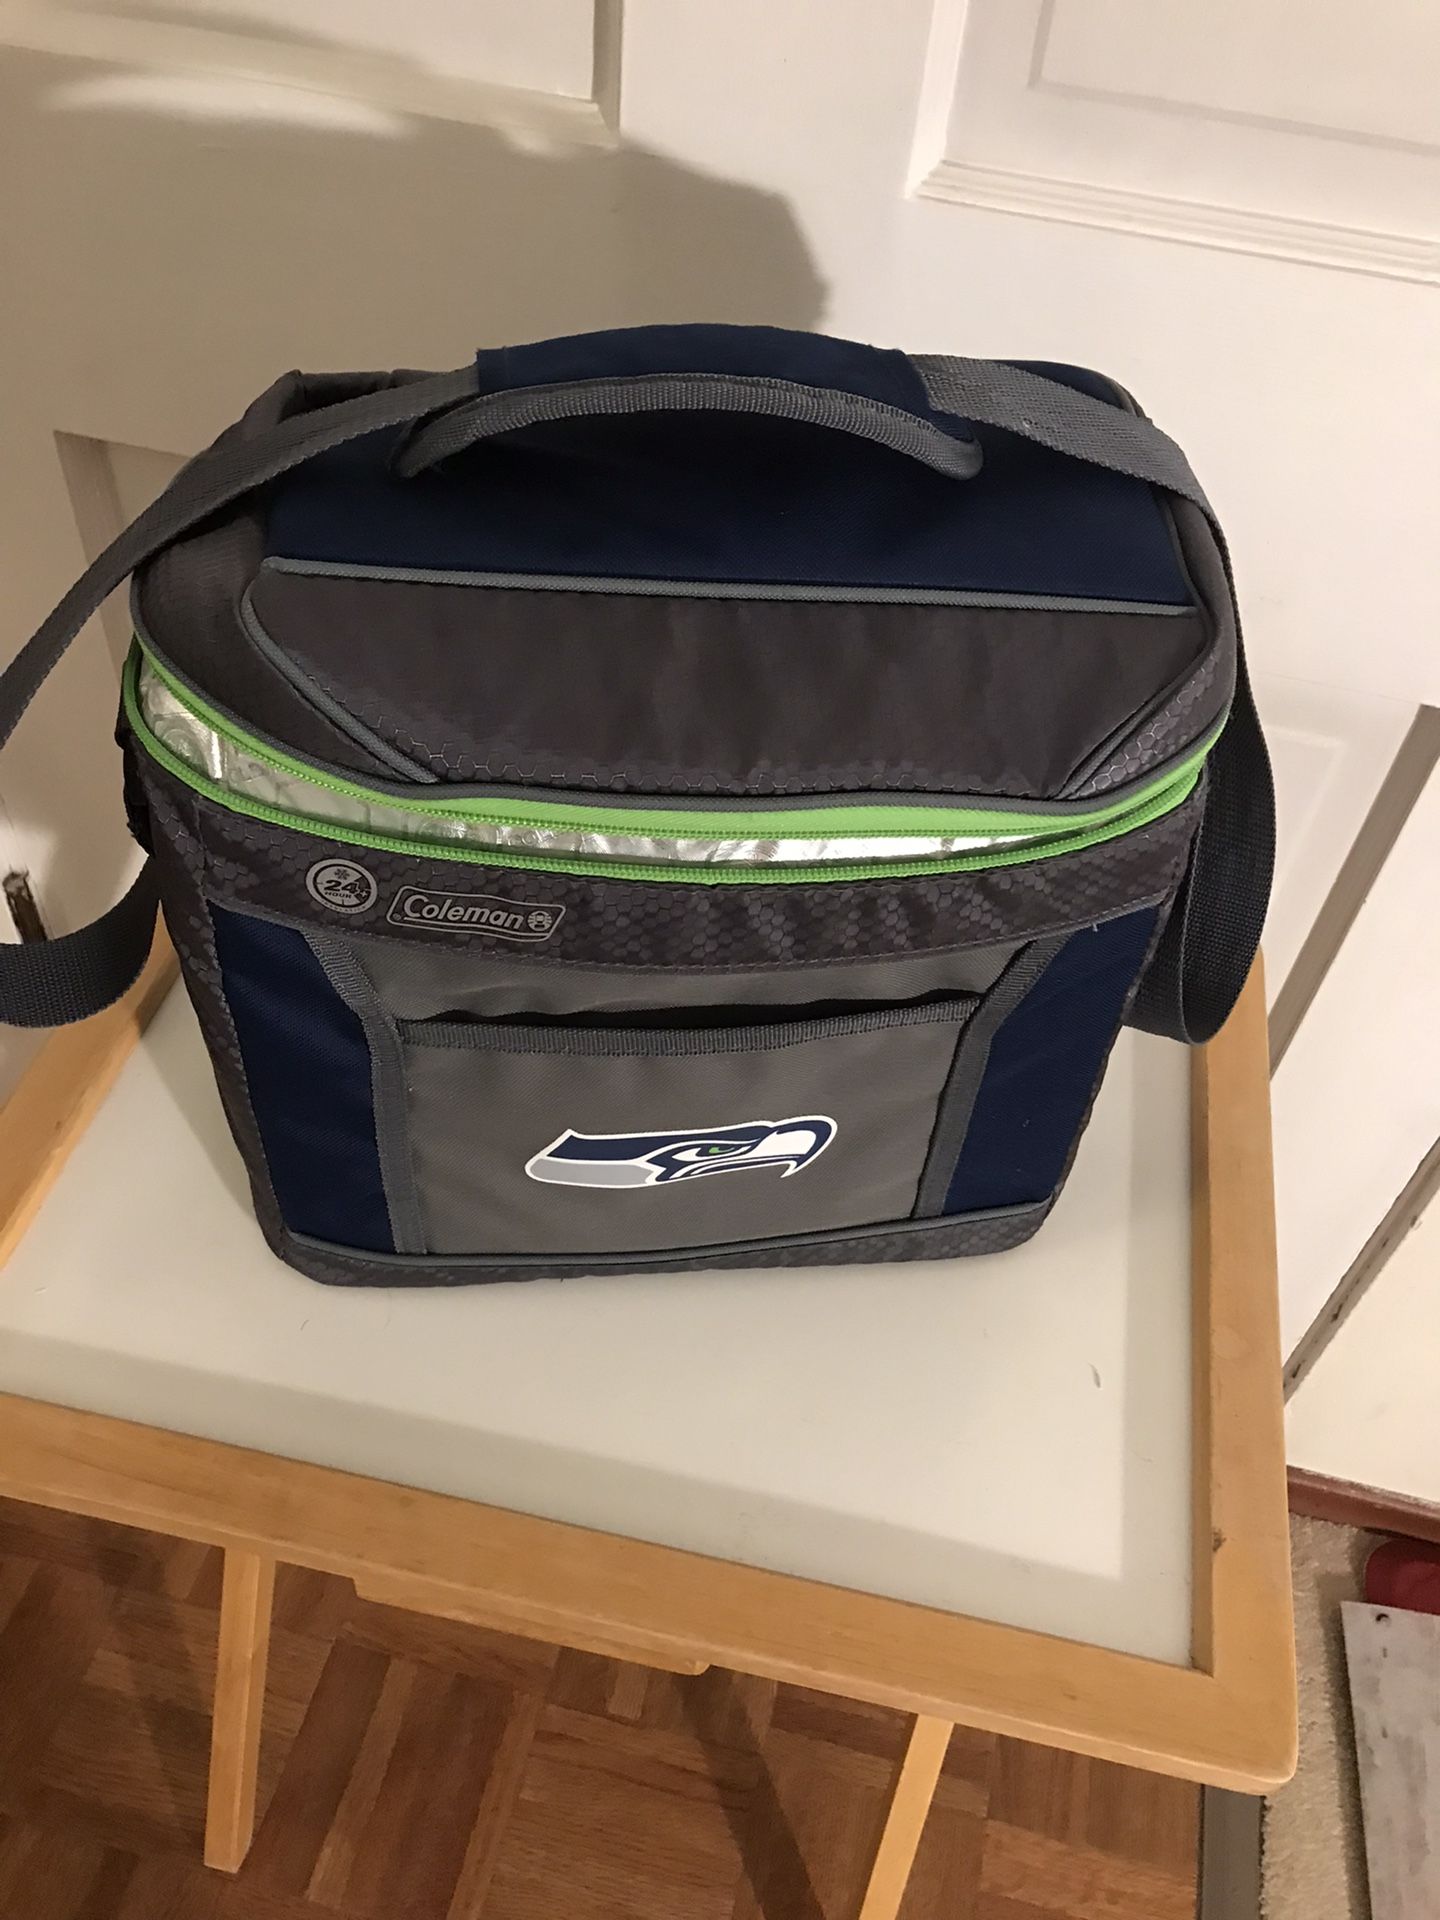 Seahawks Soft Sided Cooler Bag